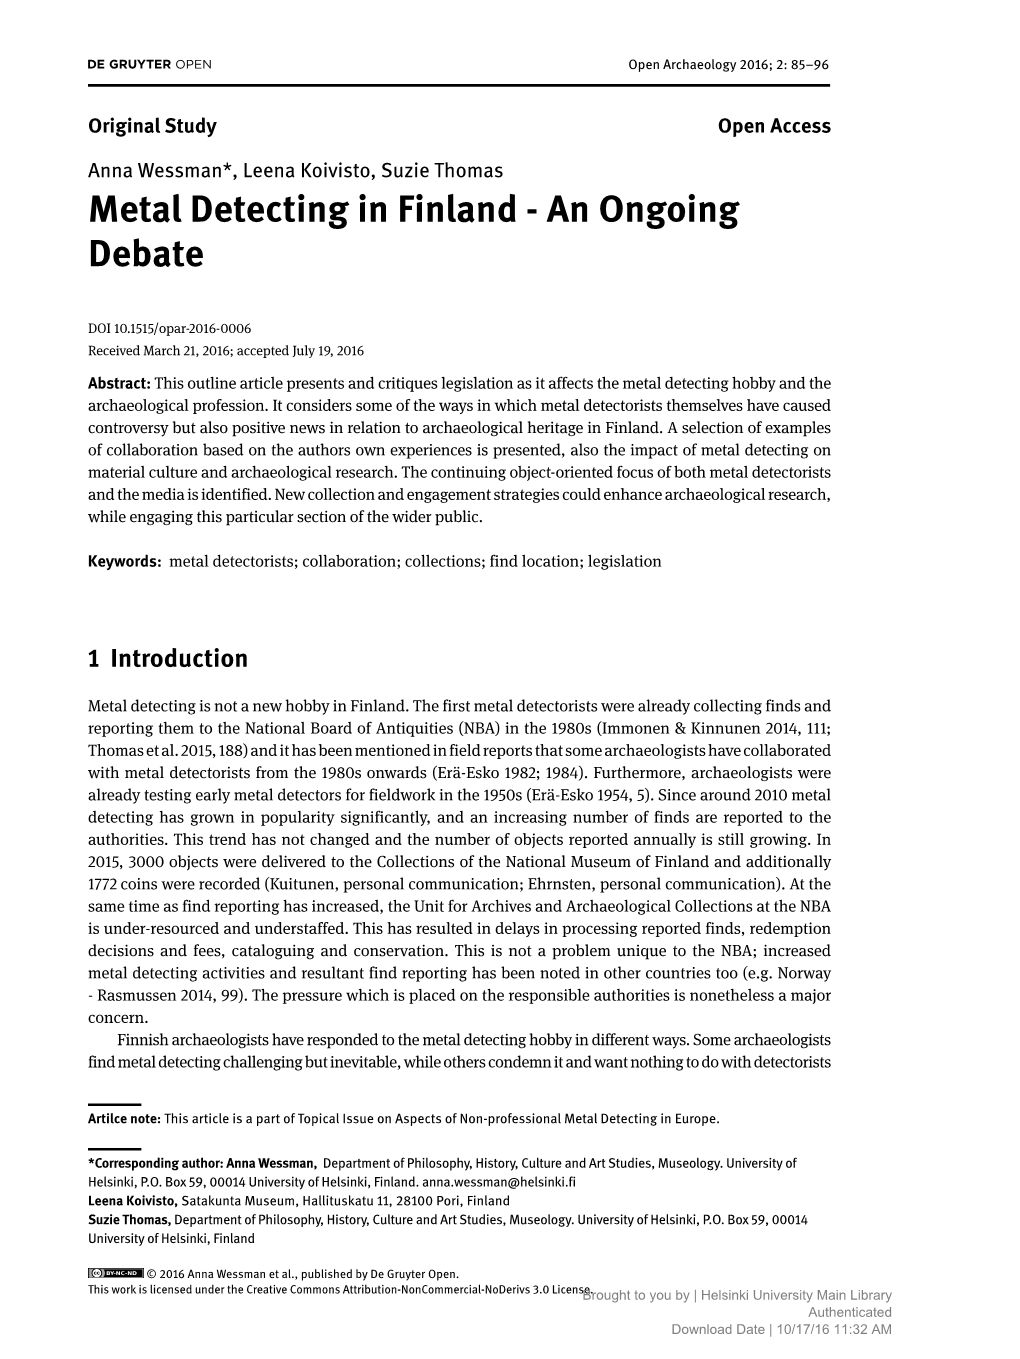 Metal Detecting in Finland - an Ongoing Debate